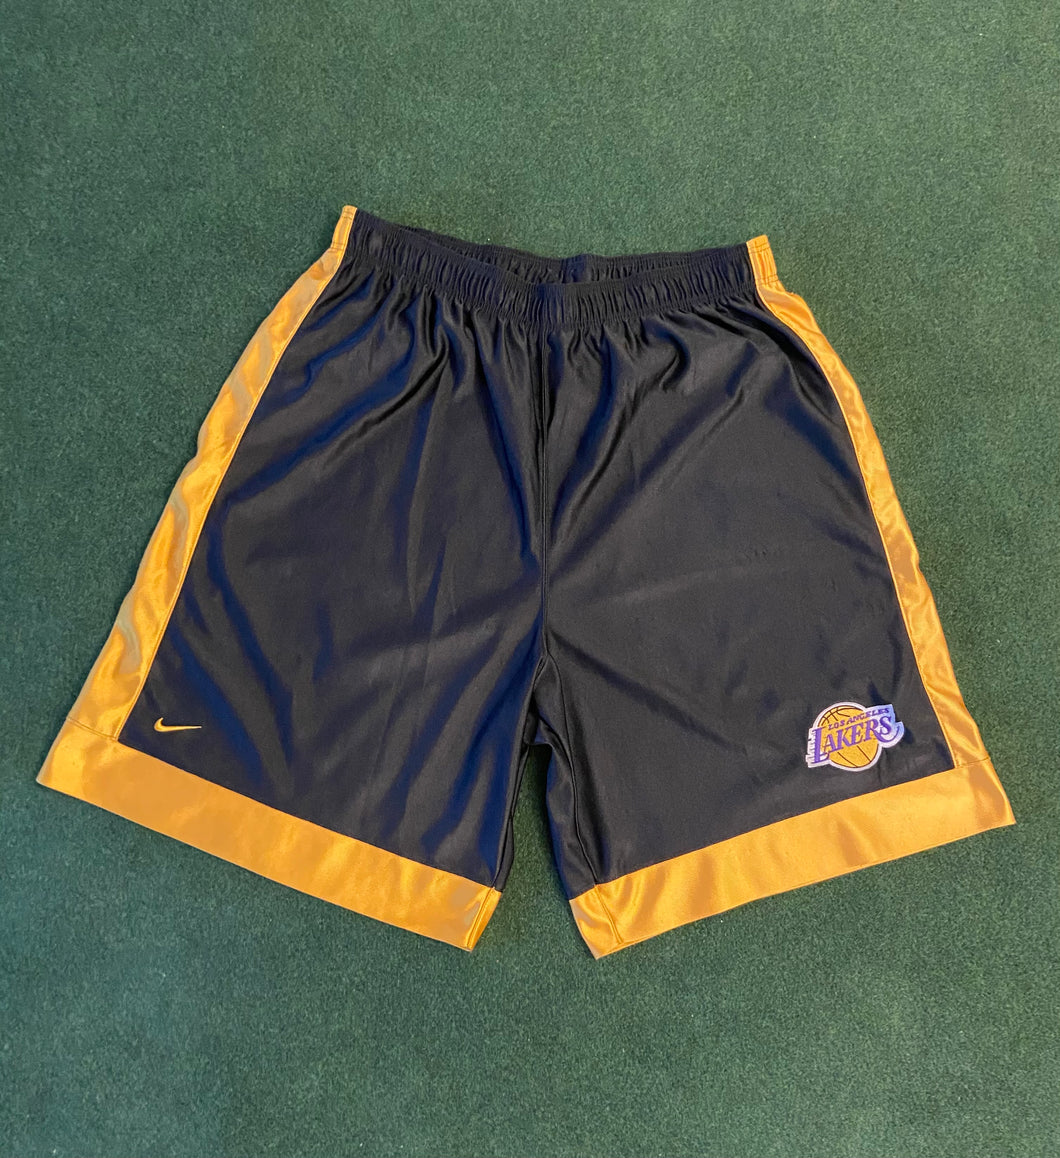 Vintage “Los Angeles Lakers” Basketball Shorts